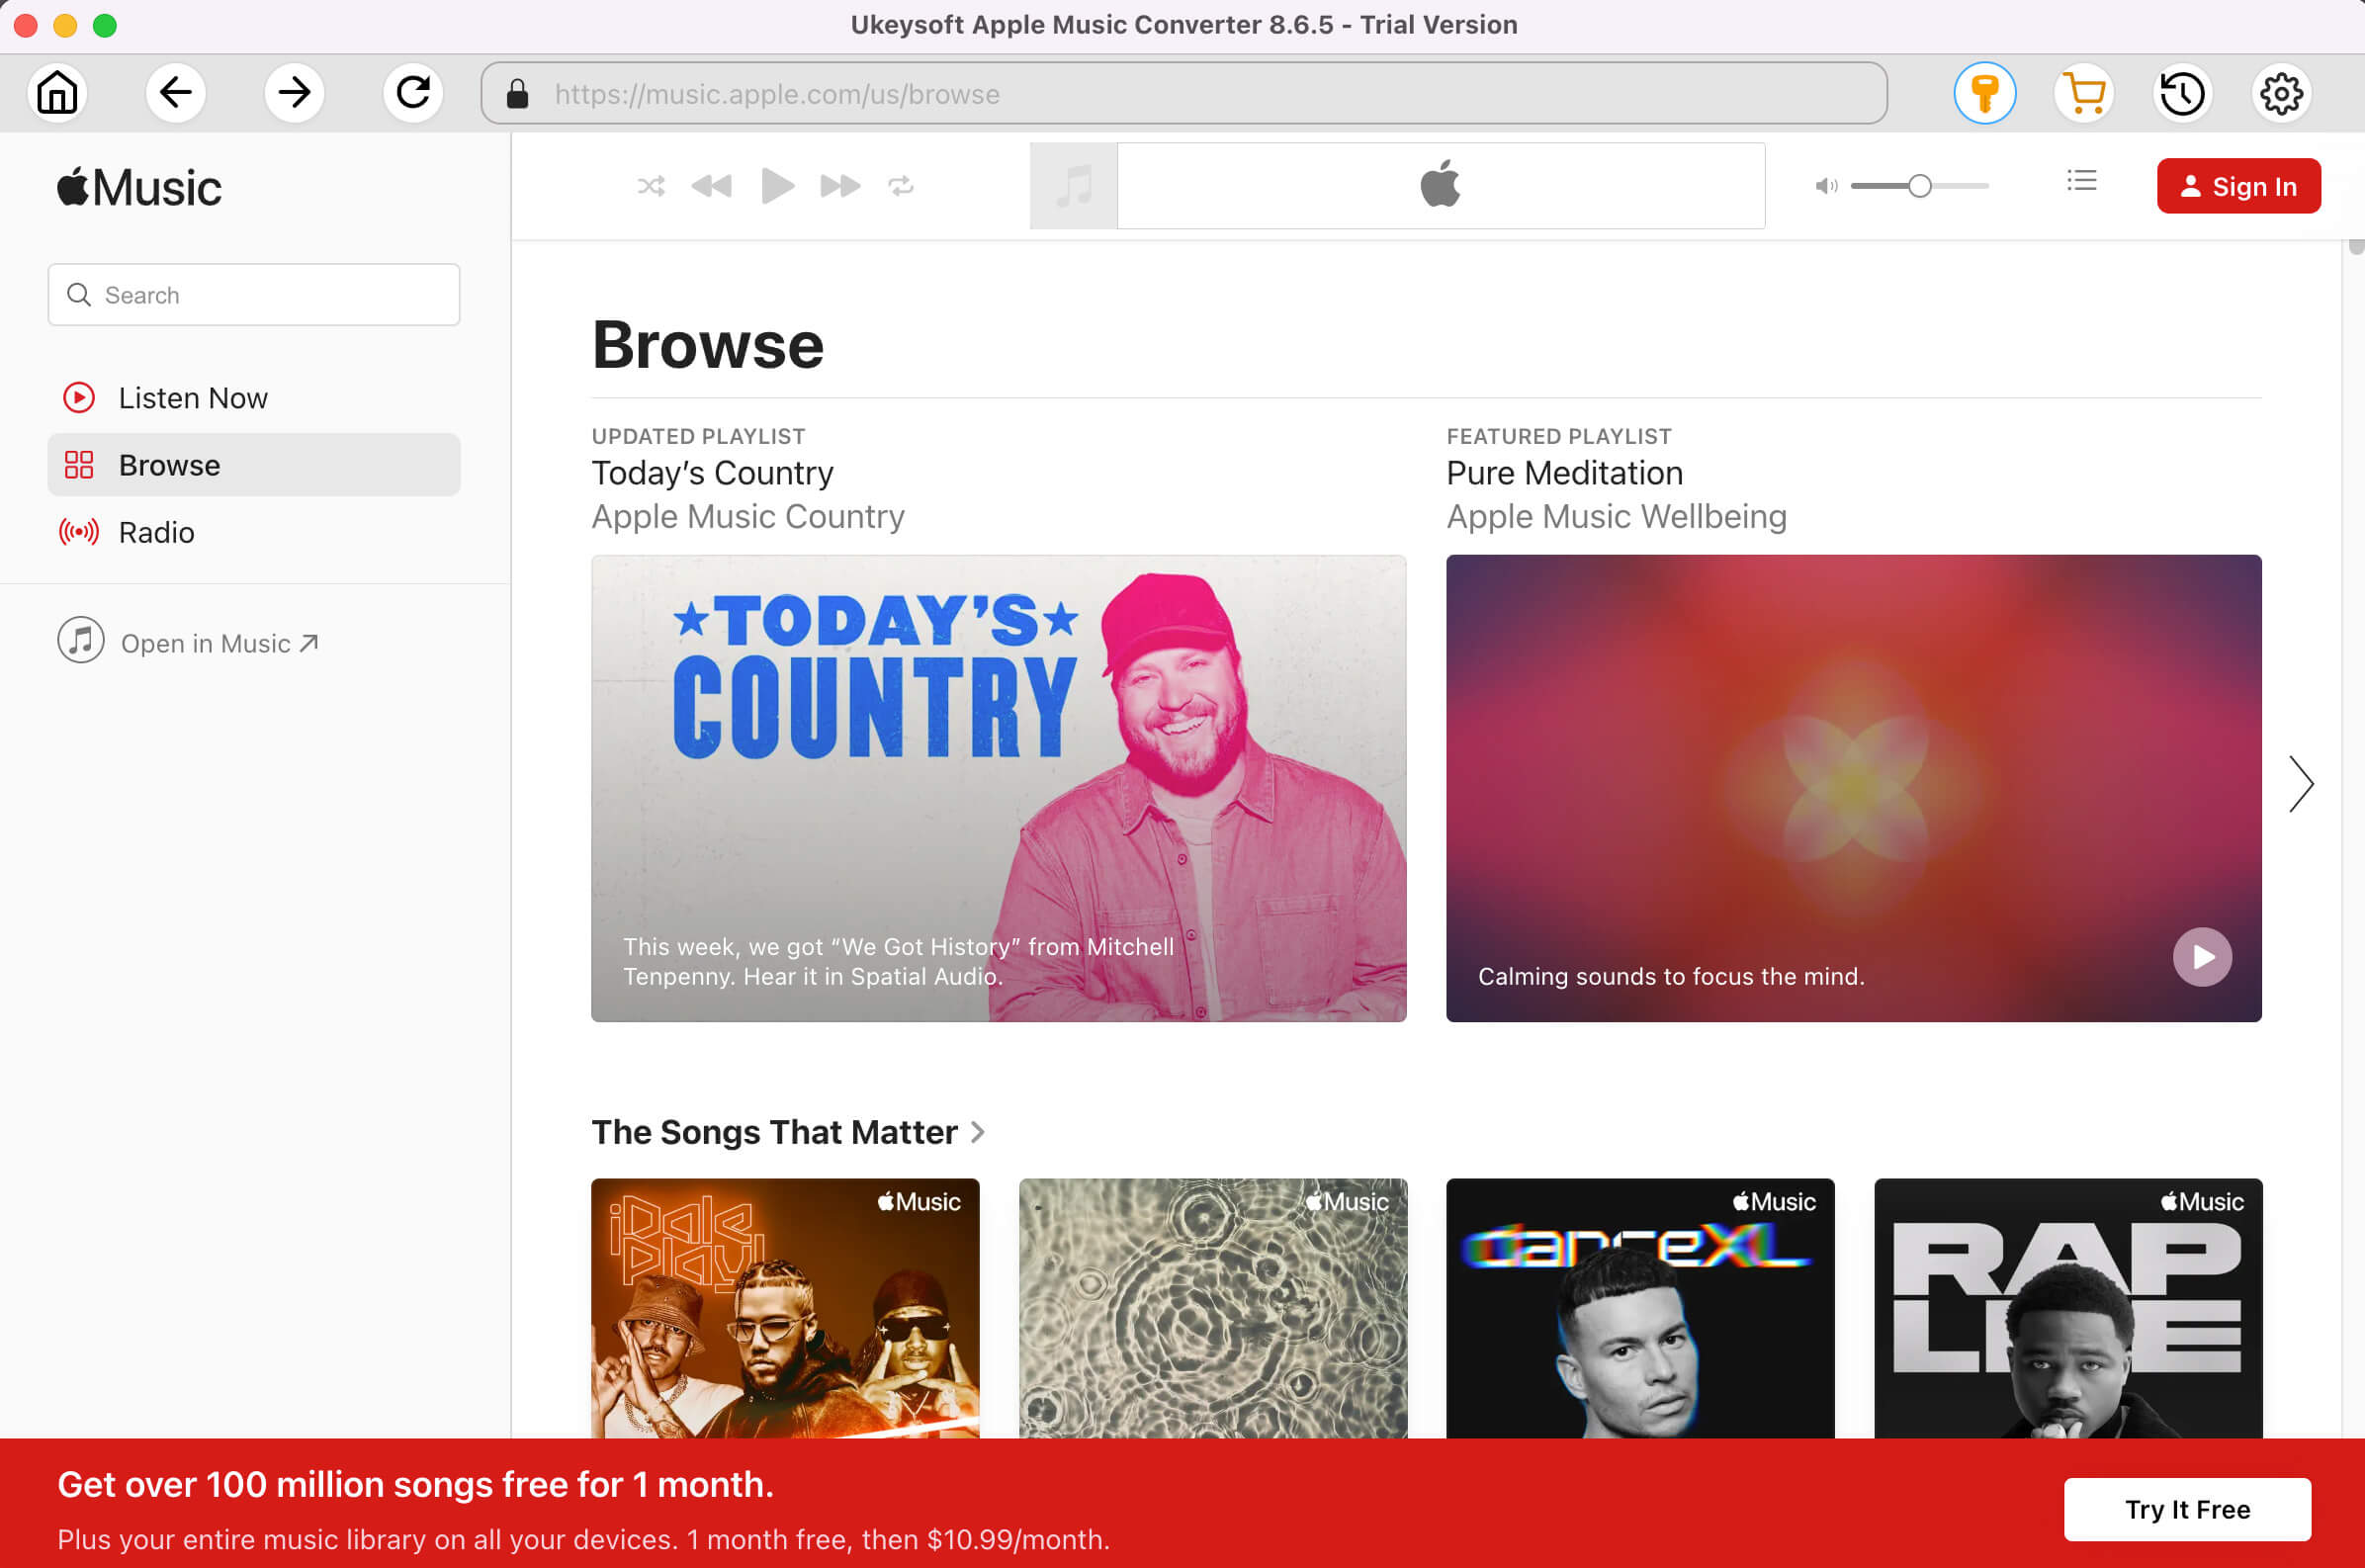 apple music converter launch itunes